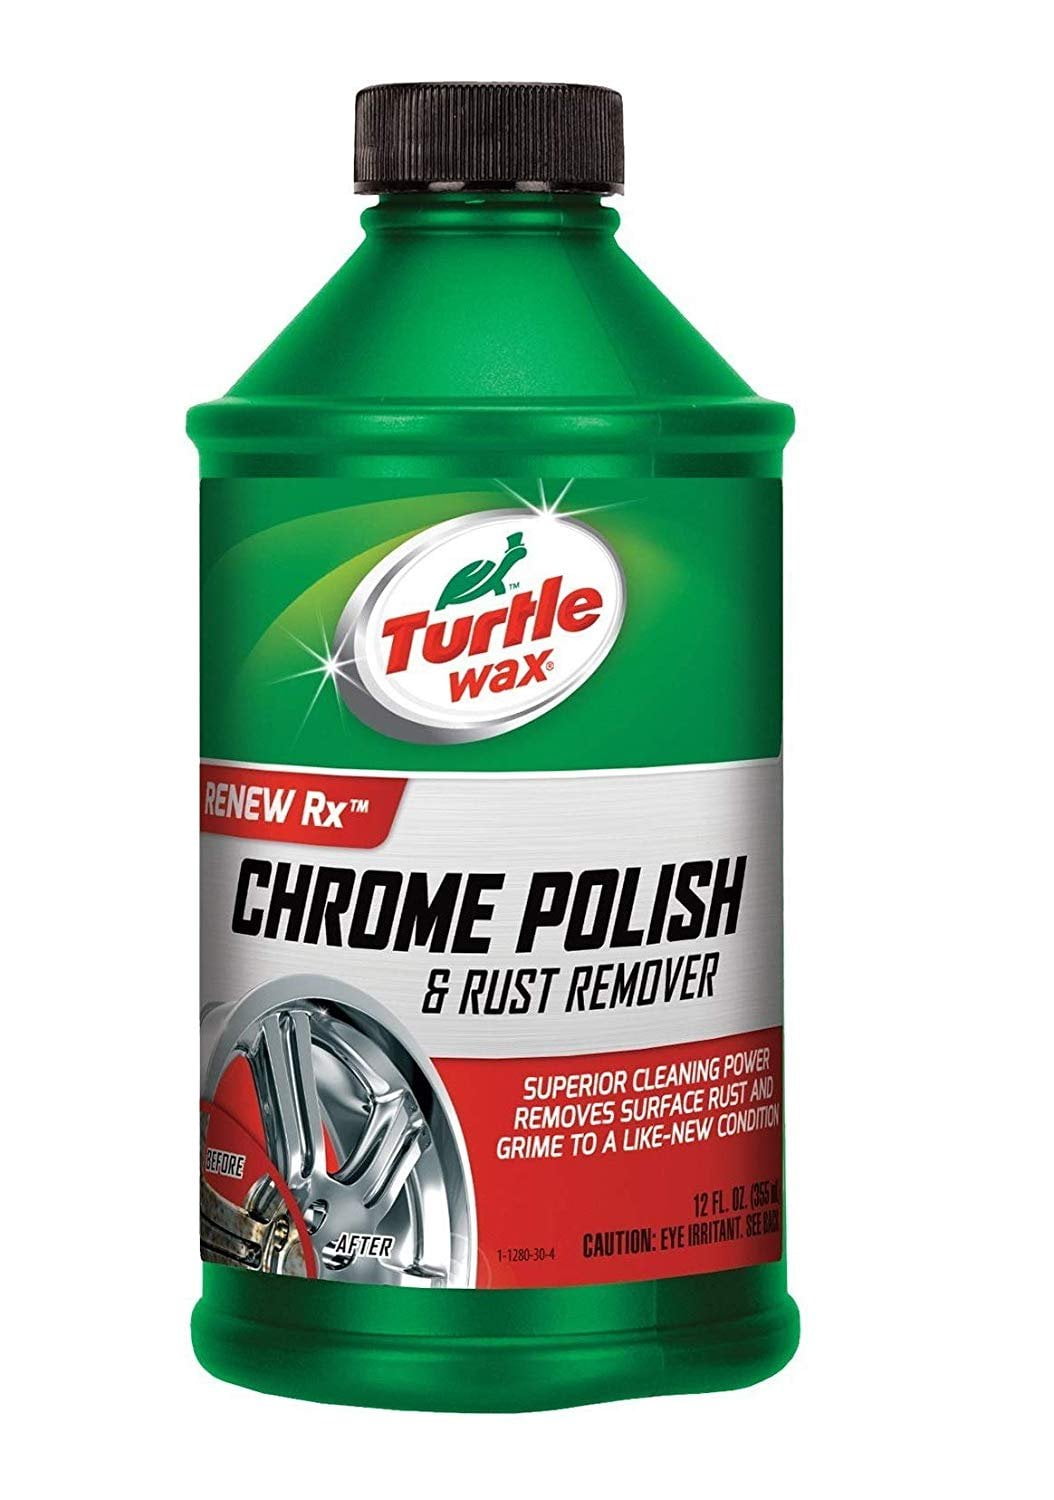 TURTLE WAX Liquid Chrome Polish 50786 - The Home Depot